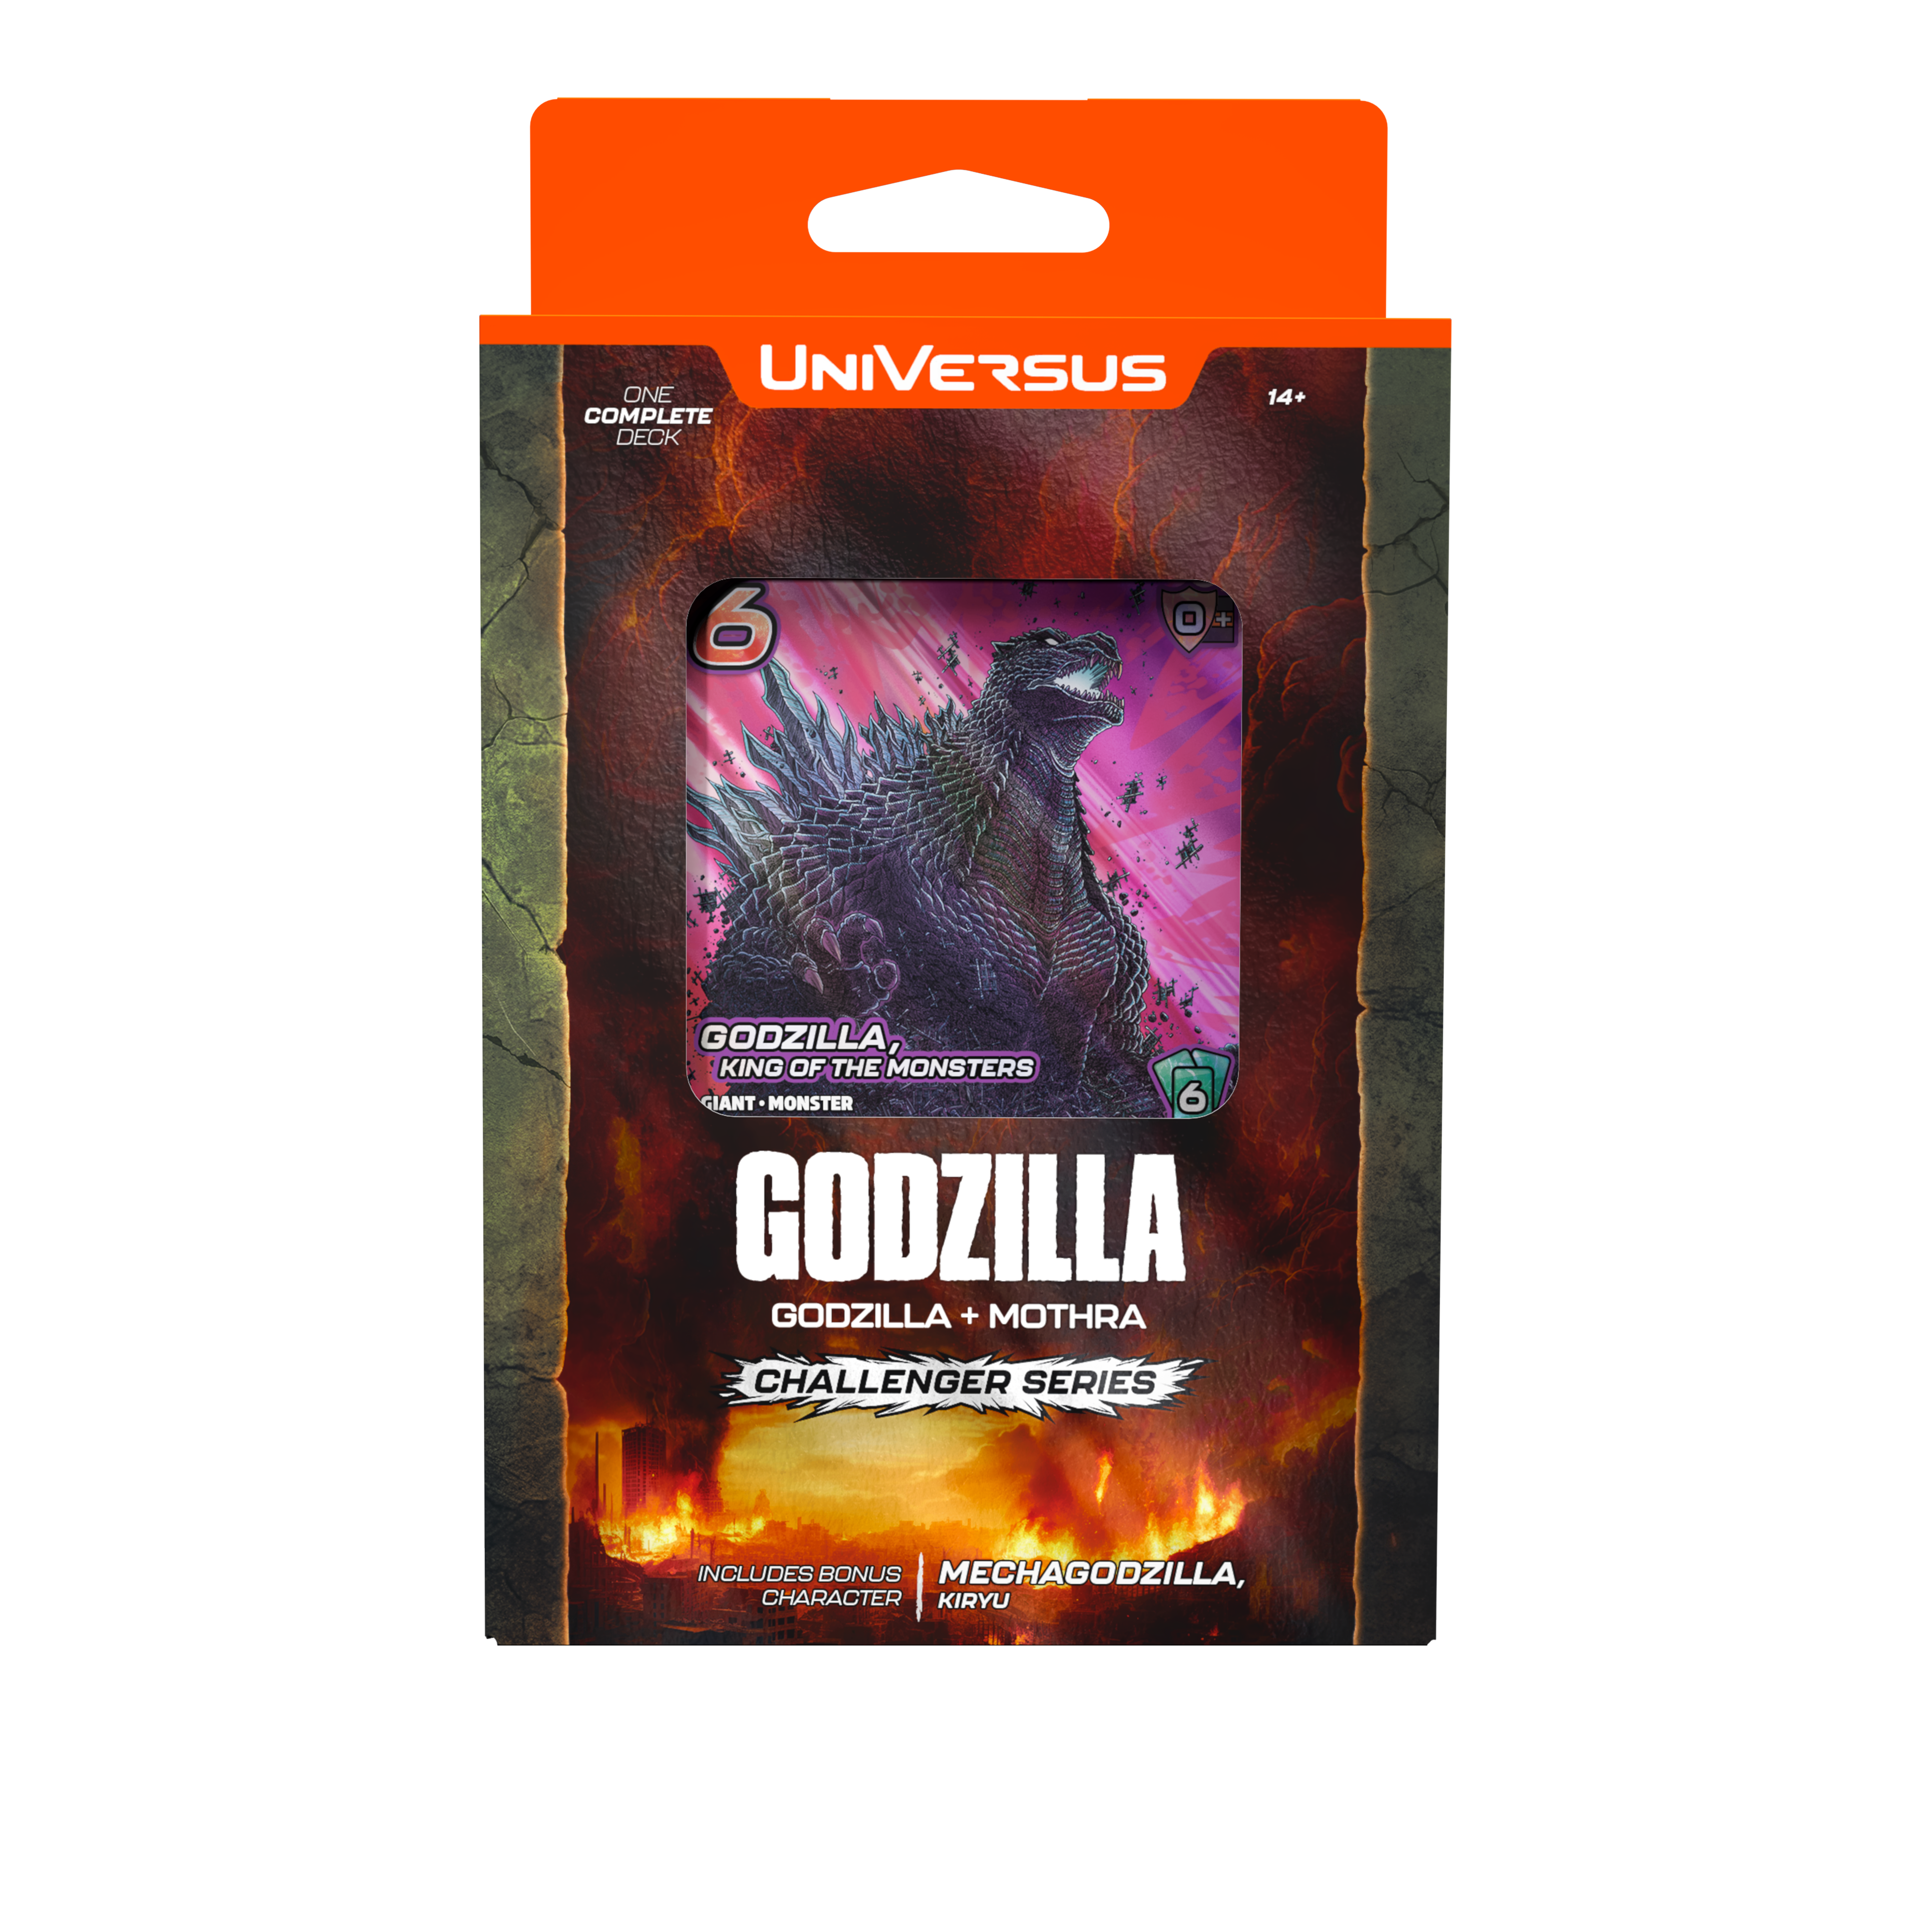 UniVersus CCG - Godzilla - Godzilla & Mothra Challenger Series Deck